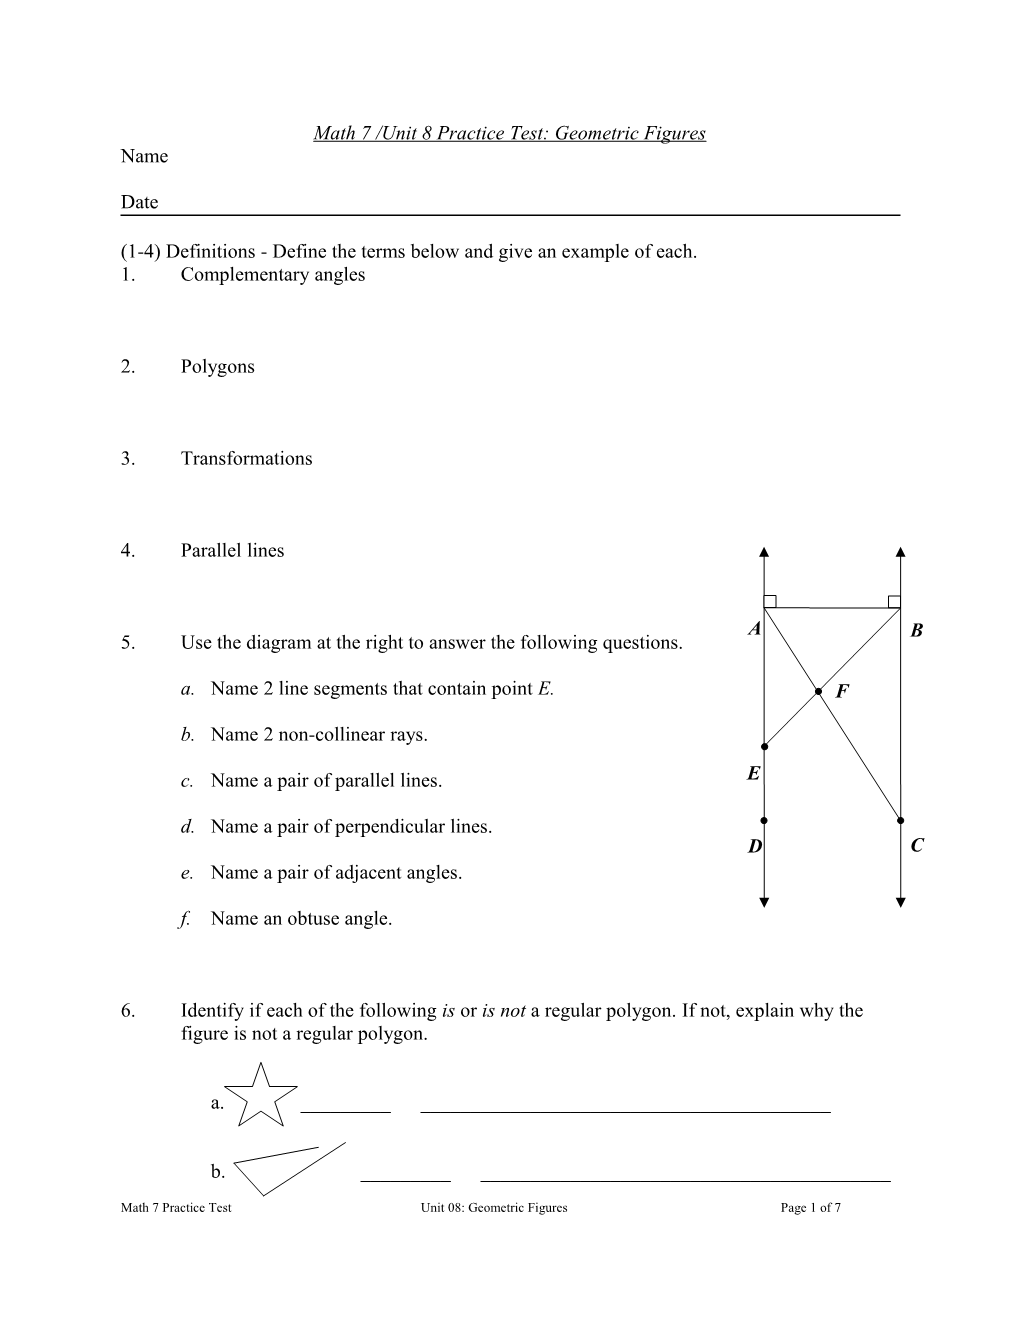 Math 7 /Unit 8 Practice Test: Geometric Figures